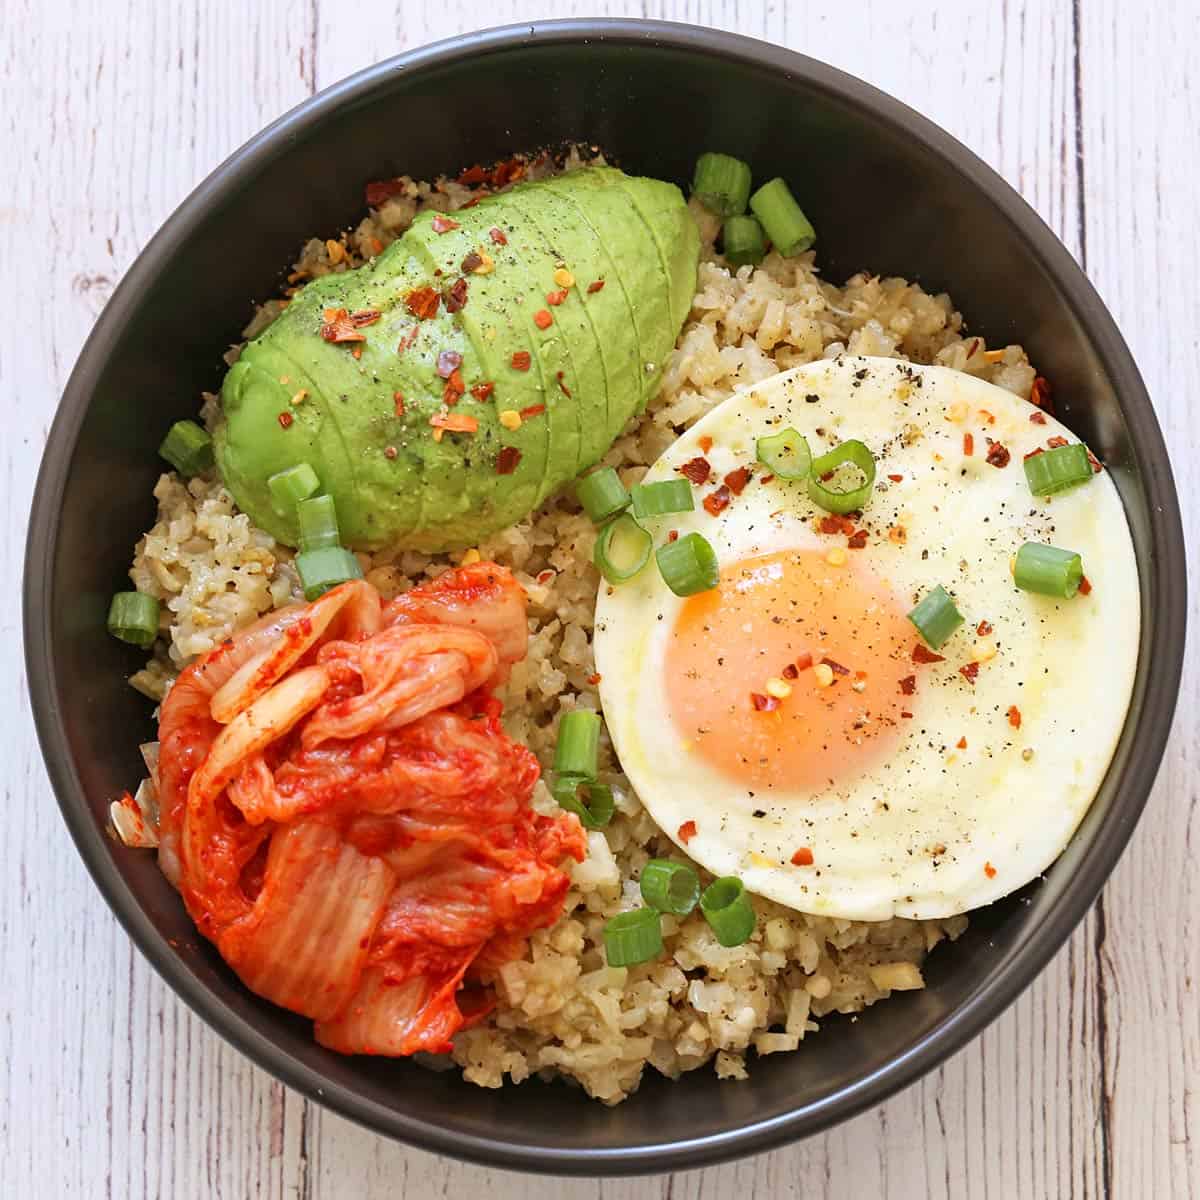 A cauliflower rice bowl with an egg, an avocado, and kimchi.